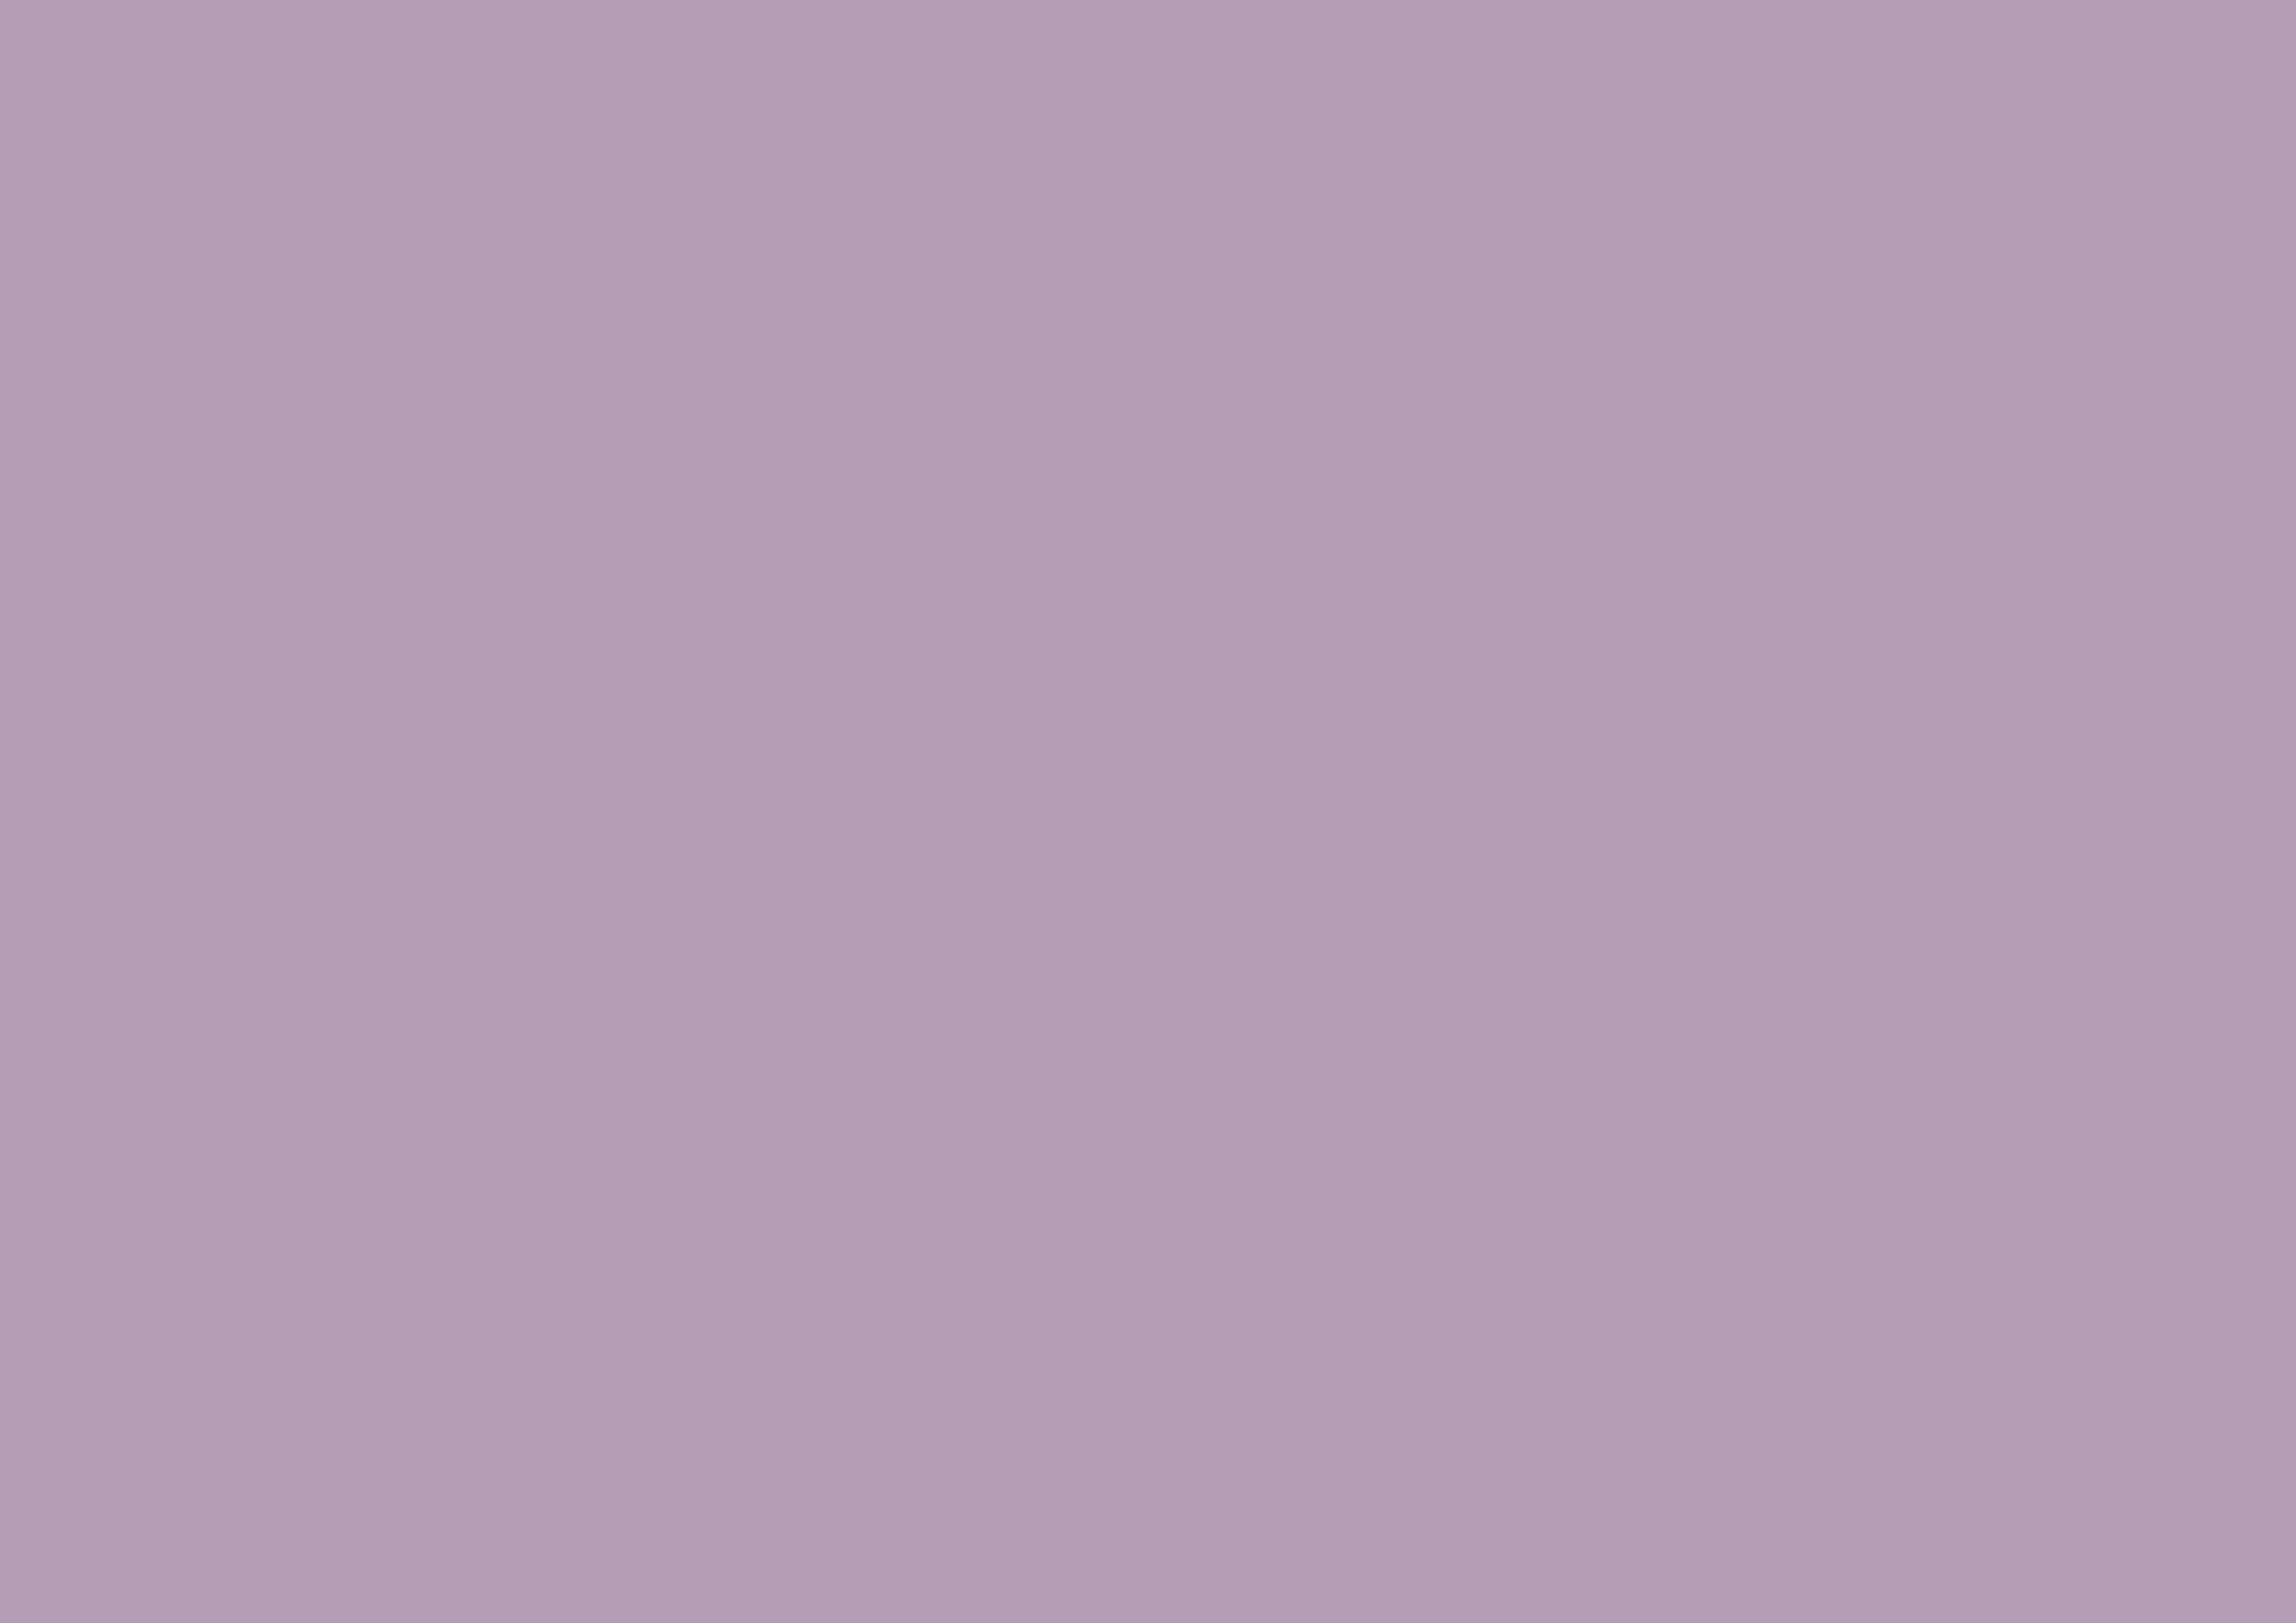 3508x2480 Pastel Purple Solid Color Background